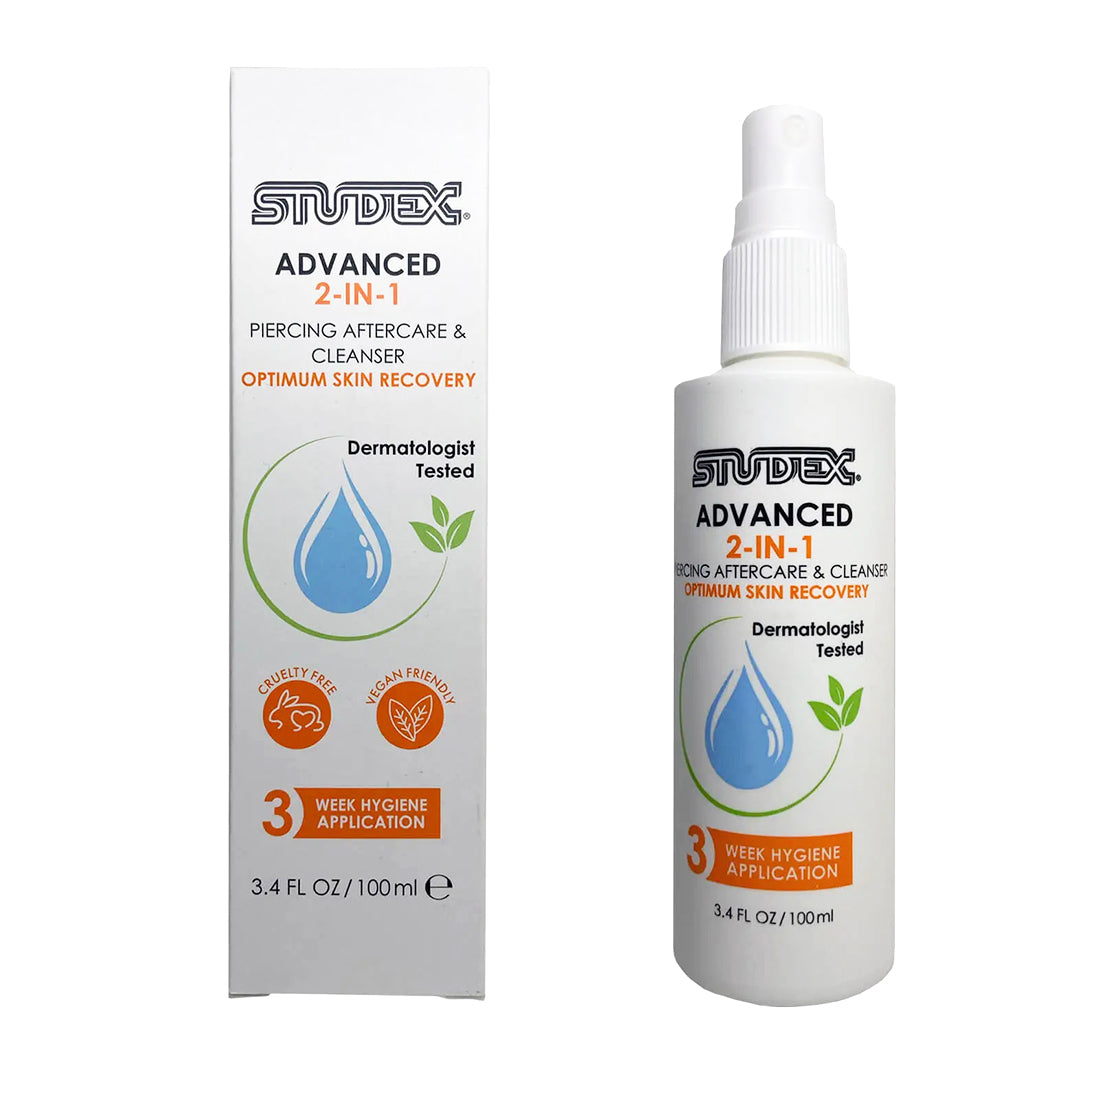 STUDEX Advanced Piercing Aftercare & Cleanser 3.4 FL OZ | 100 ml